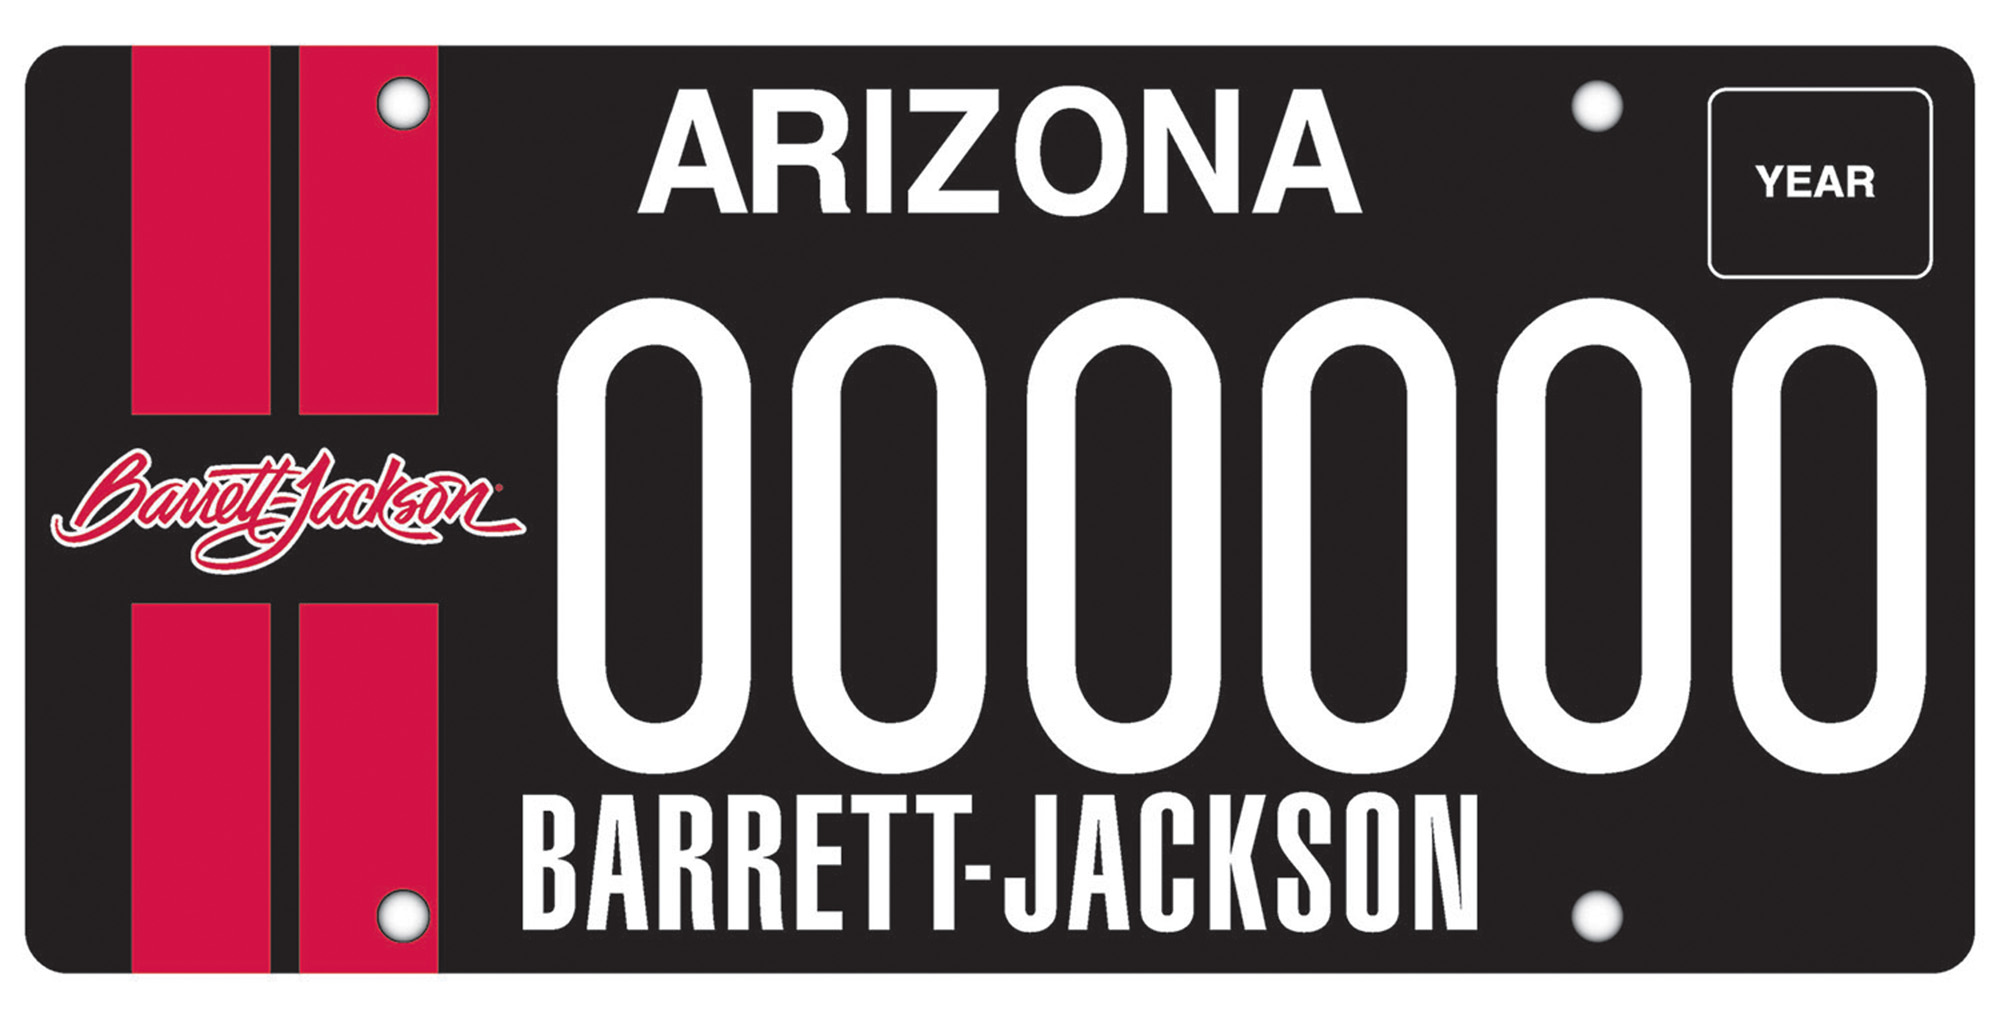 ADOT rolls out 3 new Arizona license plates